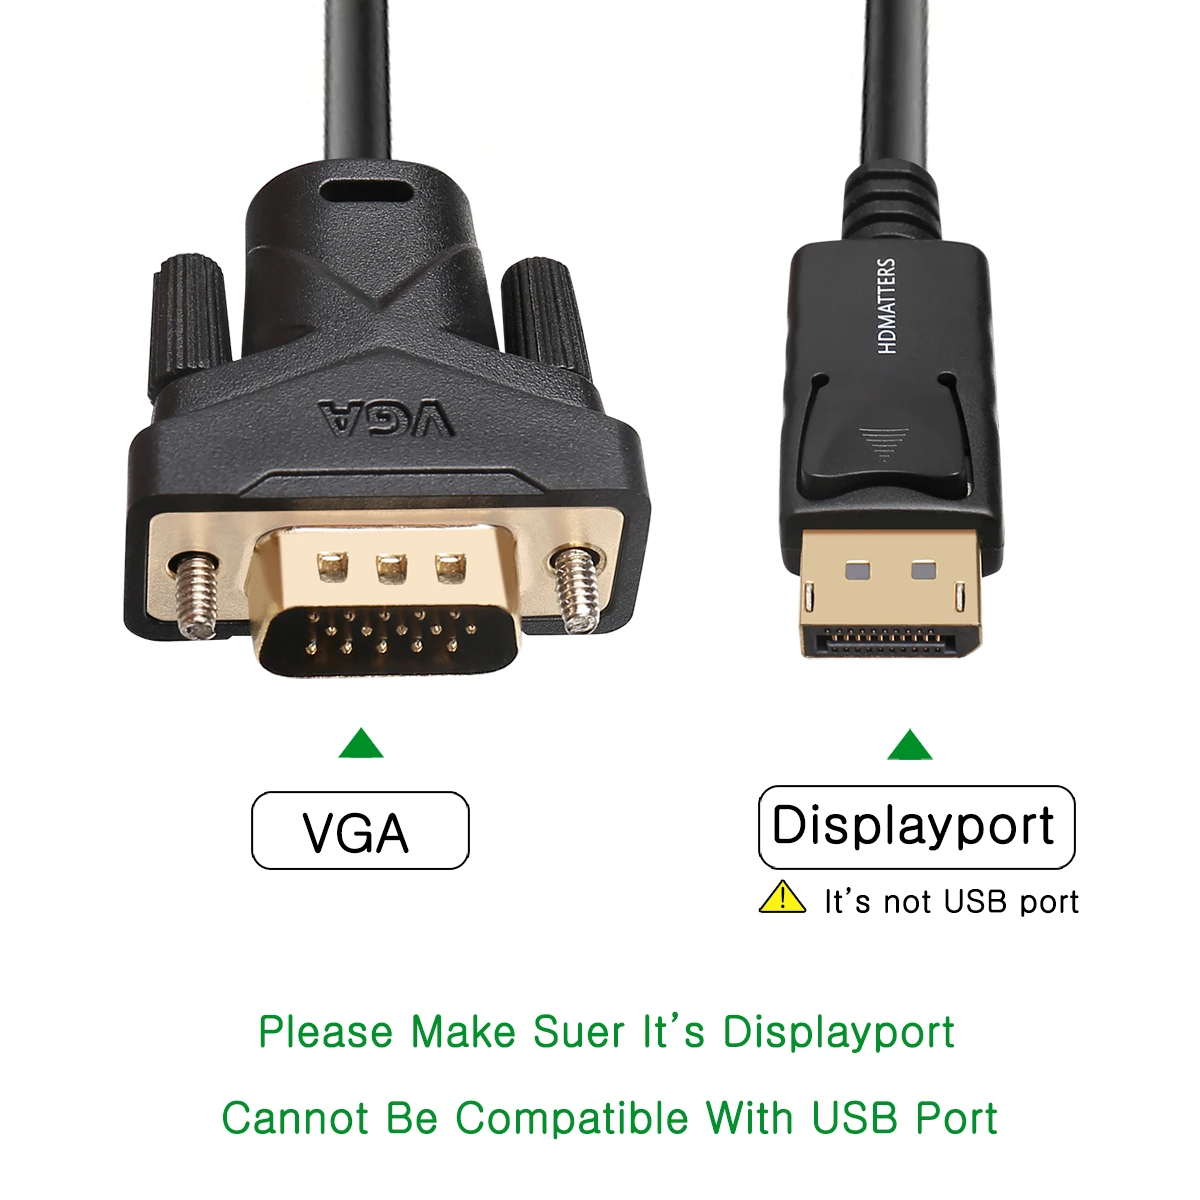 Displayport la VGA cablu 1.8 m DP la VGA adaptor convertor cablu DP male la VGA de sex masculin pentru HP Dell Asus lenovo PC laptop